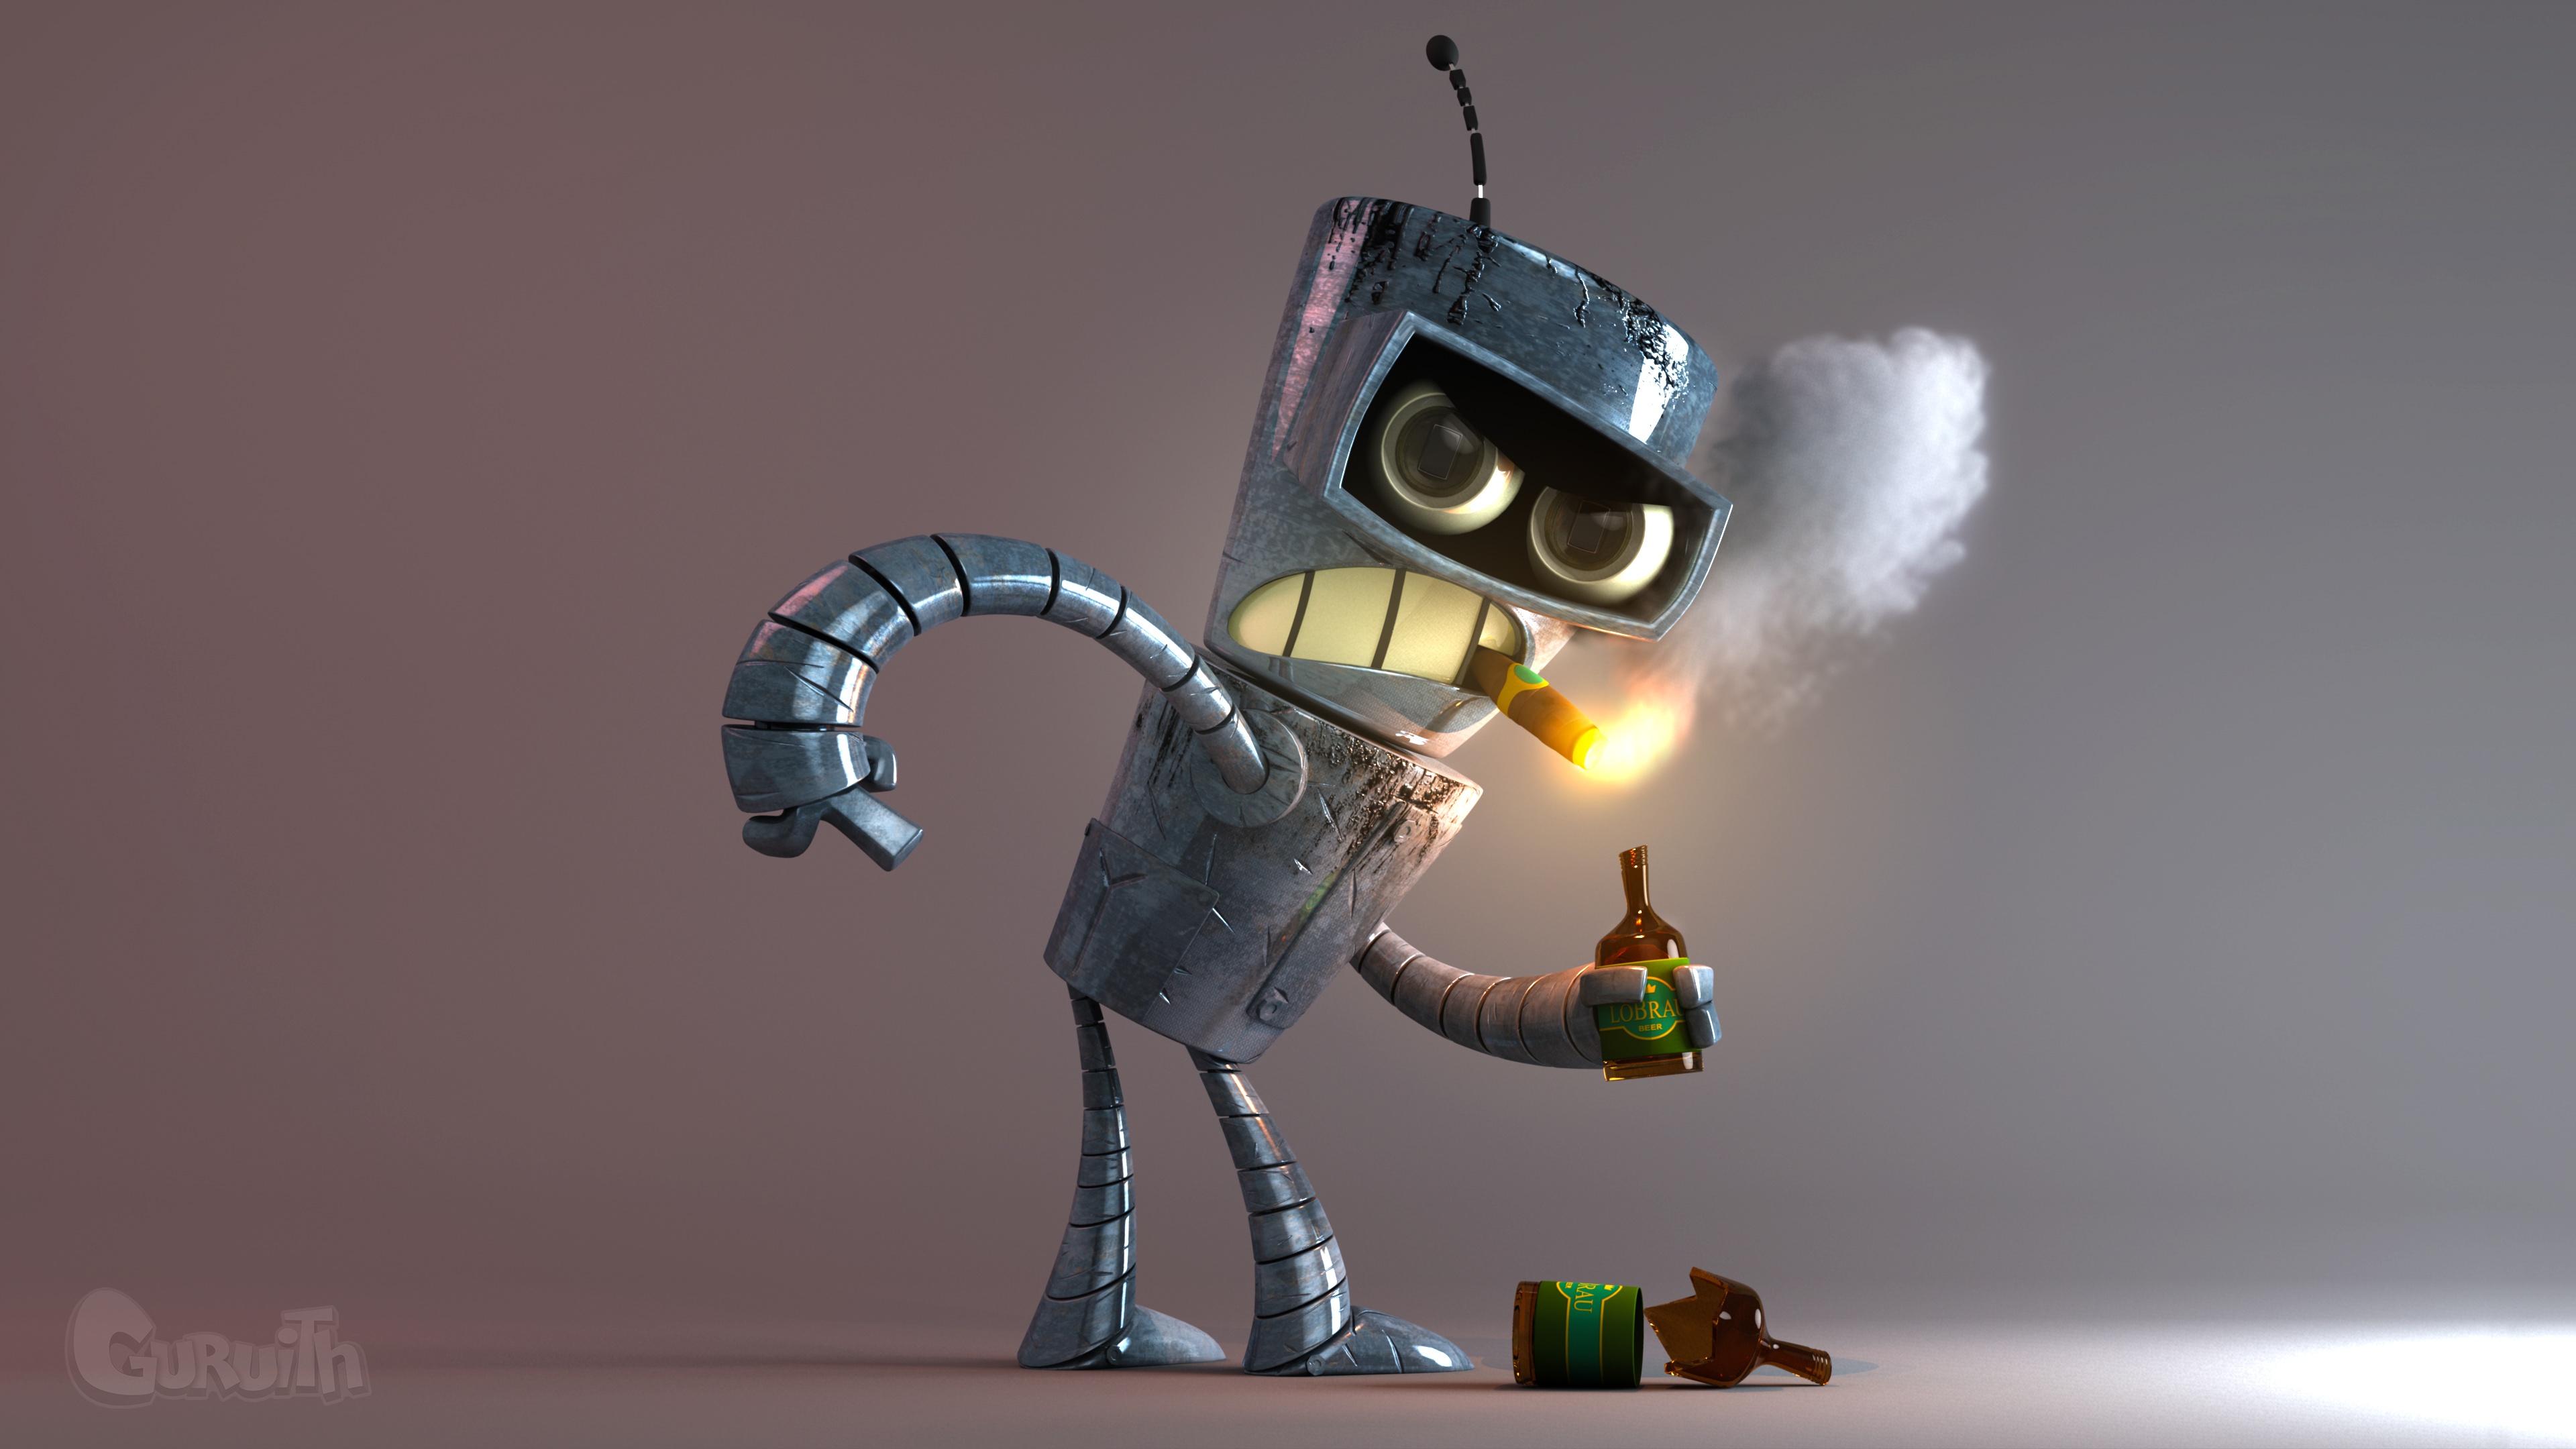 Bender Futurama Cigar Robot 3840x2160